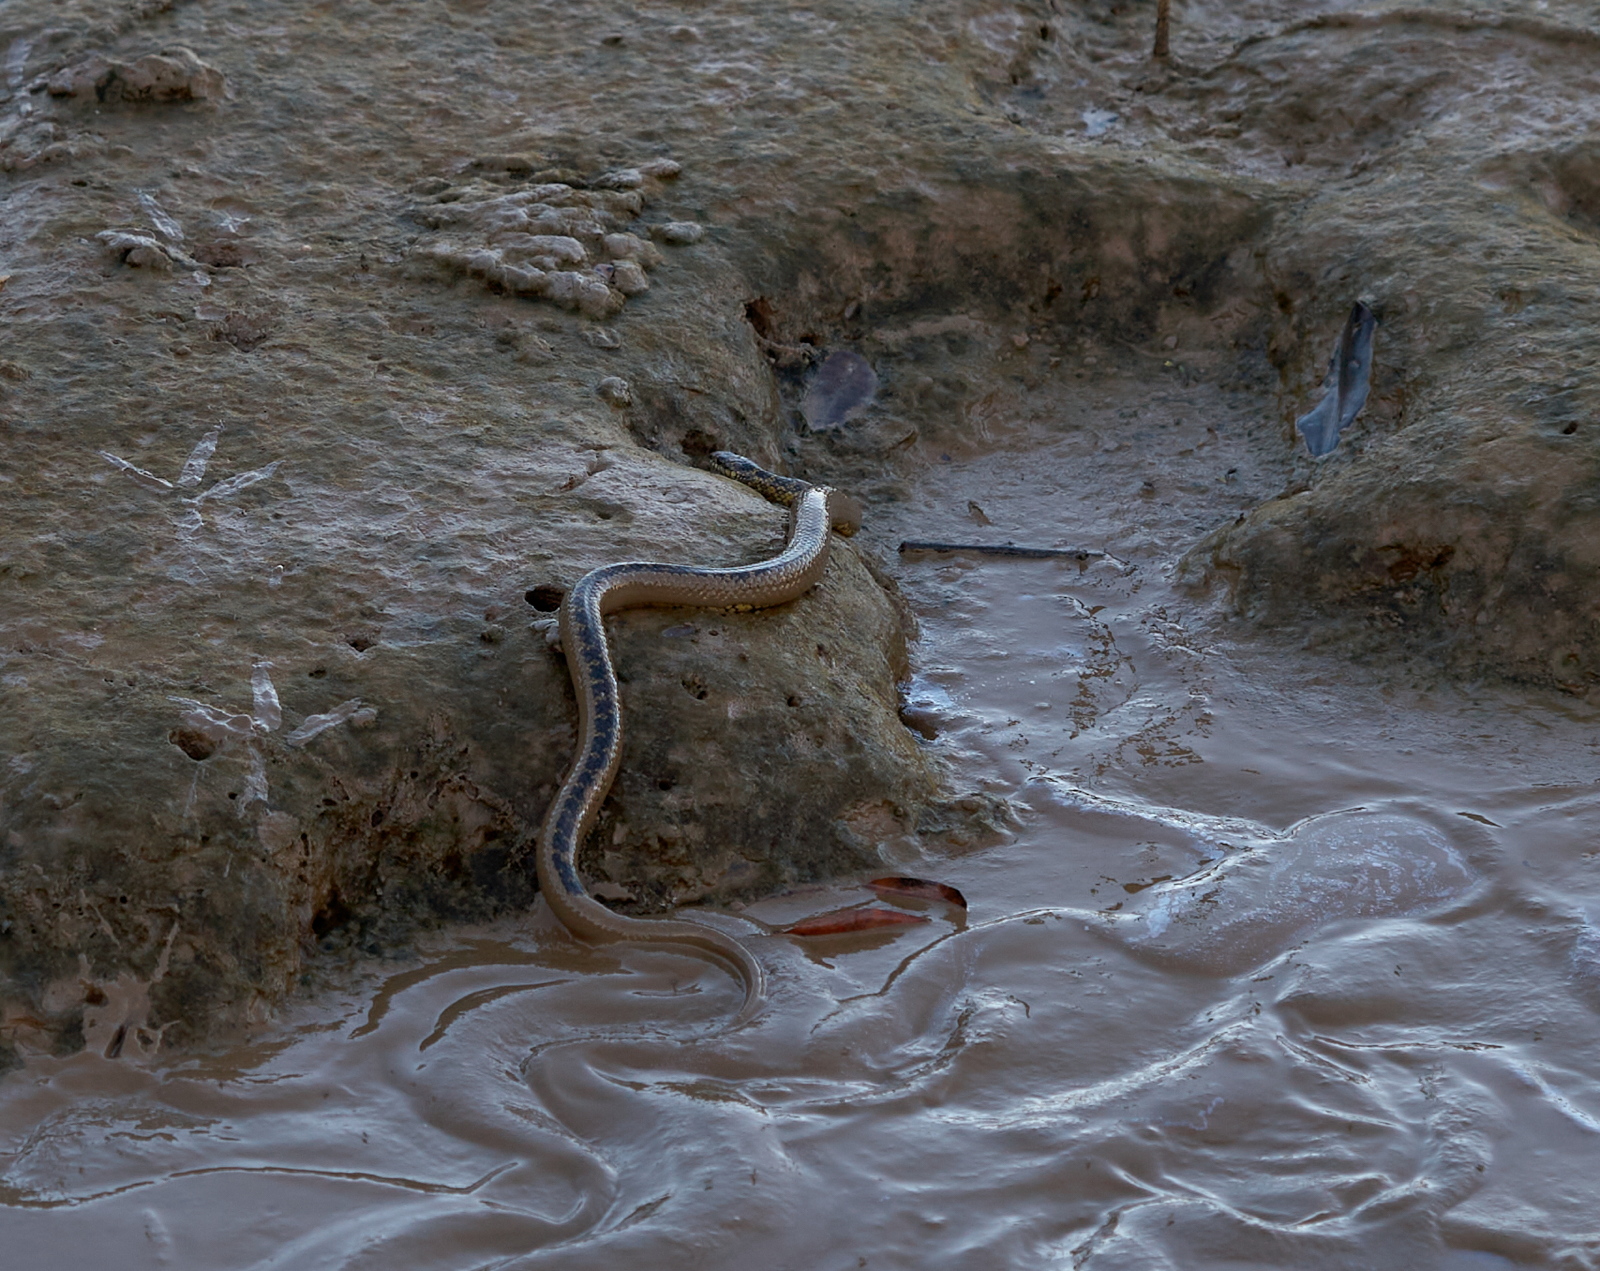 7 – Erythrolamprus cobella or mangrove snake (Dipsadidae)